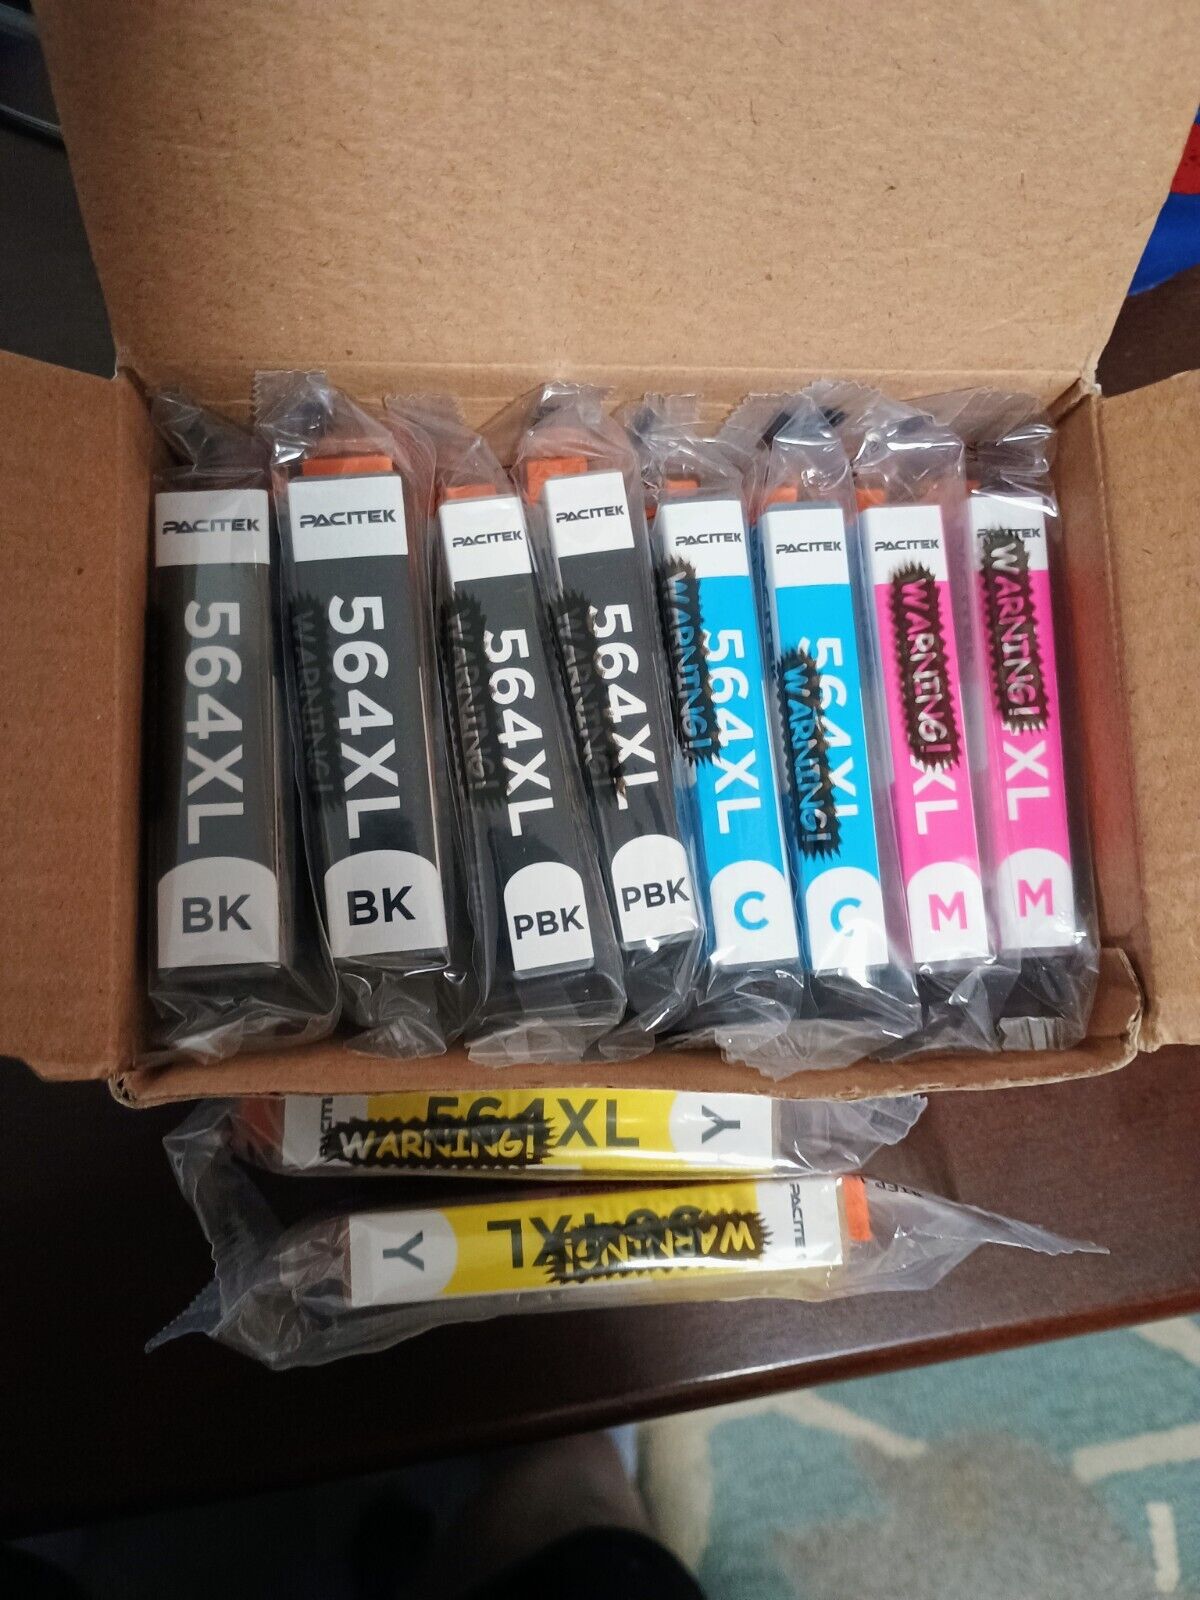 Pacitek Ink Cartridges 10 Pack HP 564XL High Yield